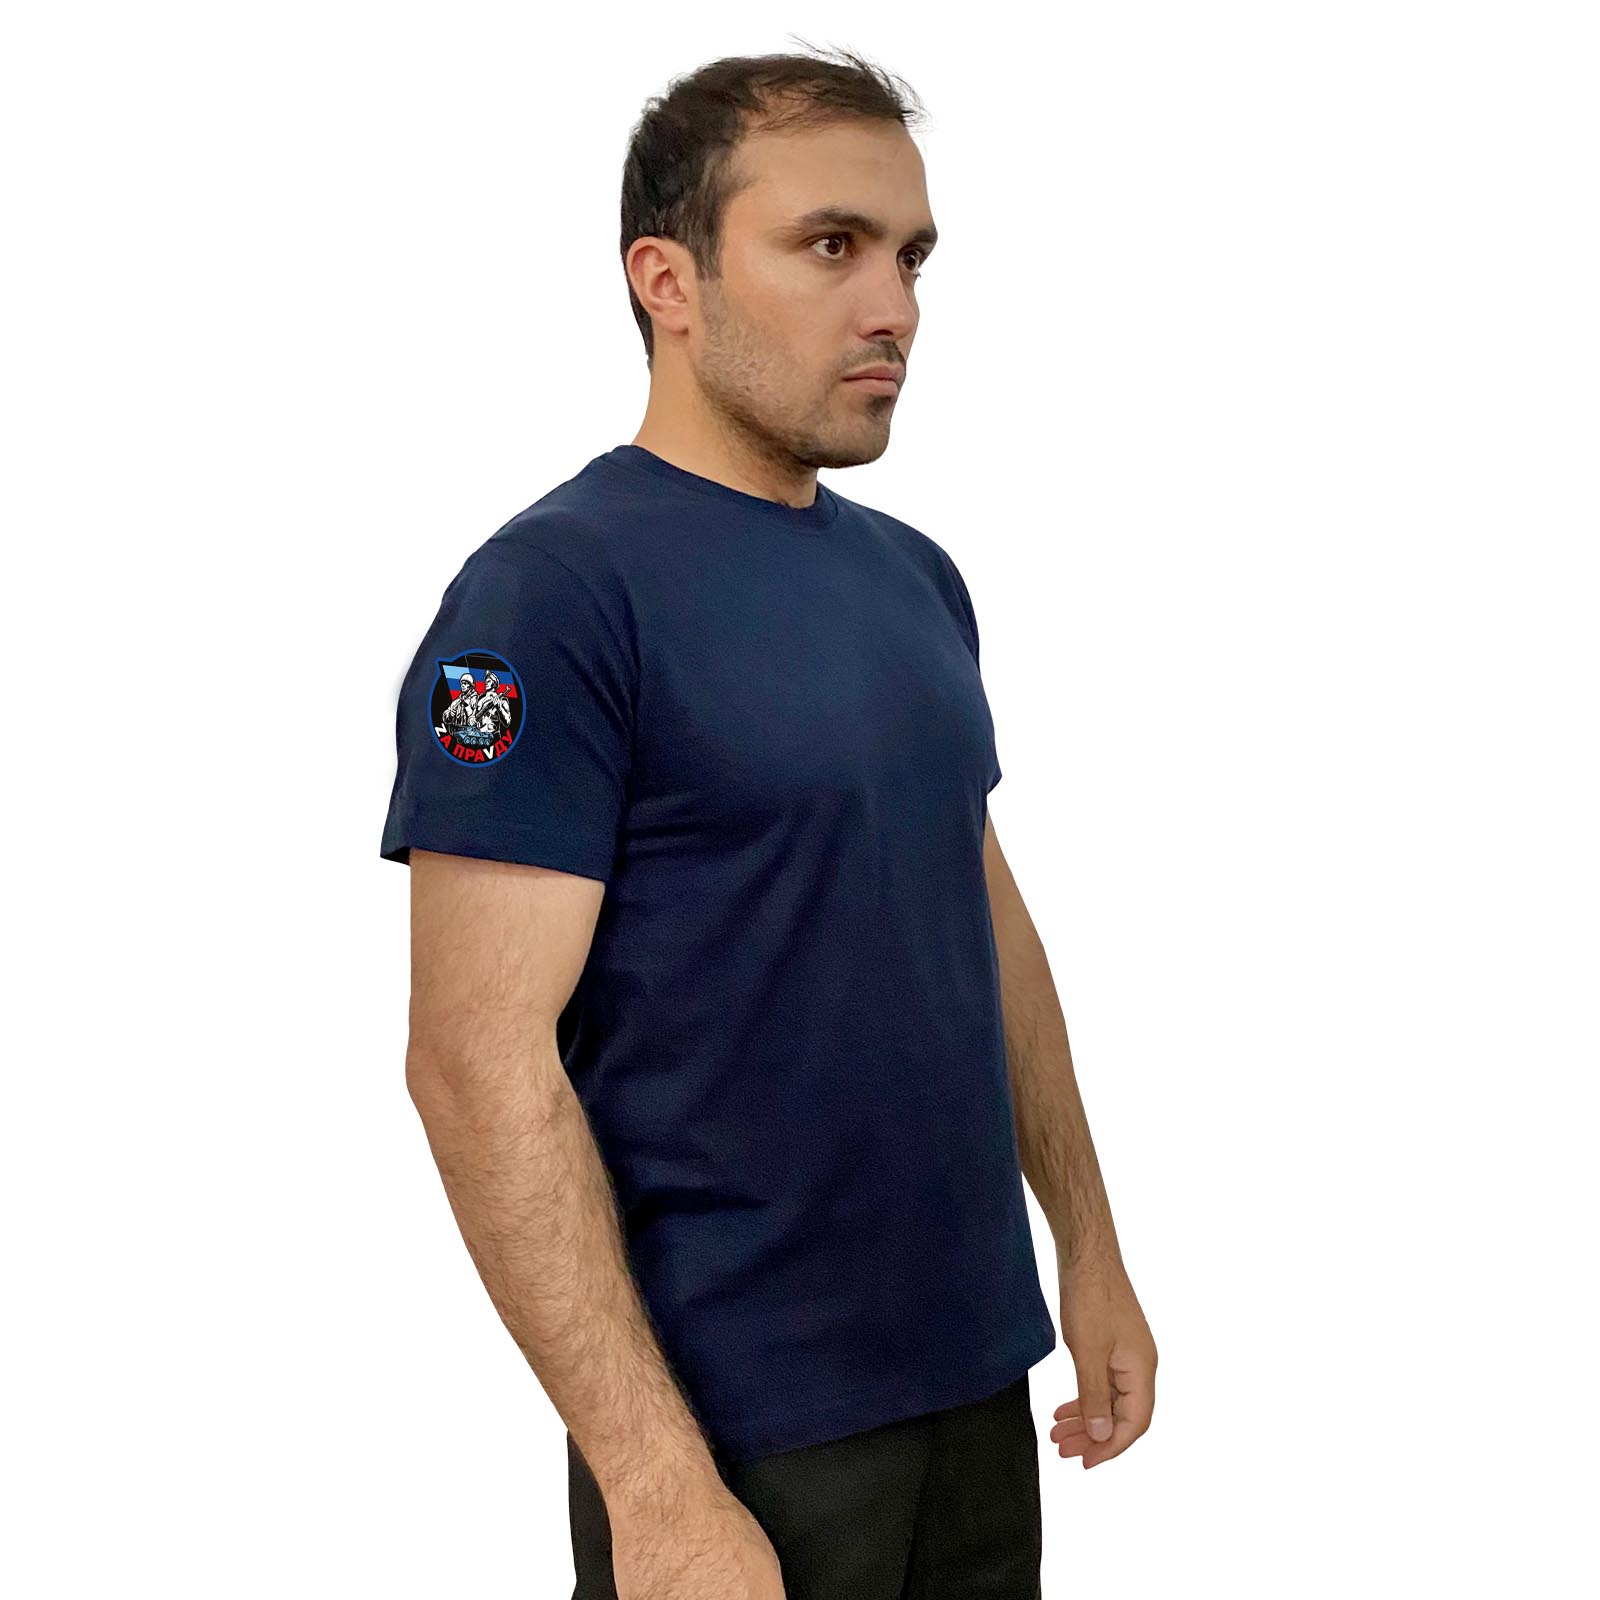 Тёмно-синяя футболка с термопринтом "Zа праVду" на рукаве